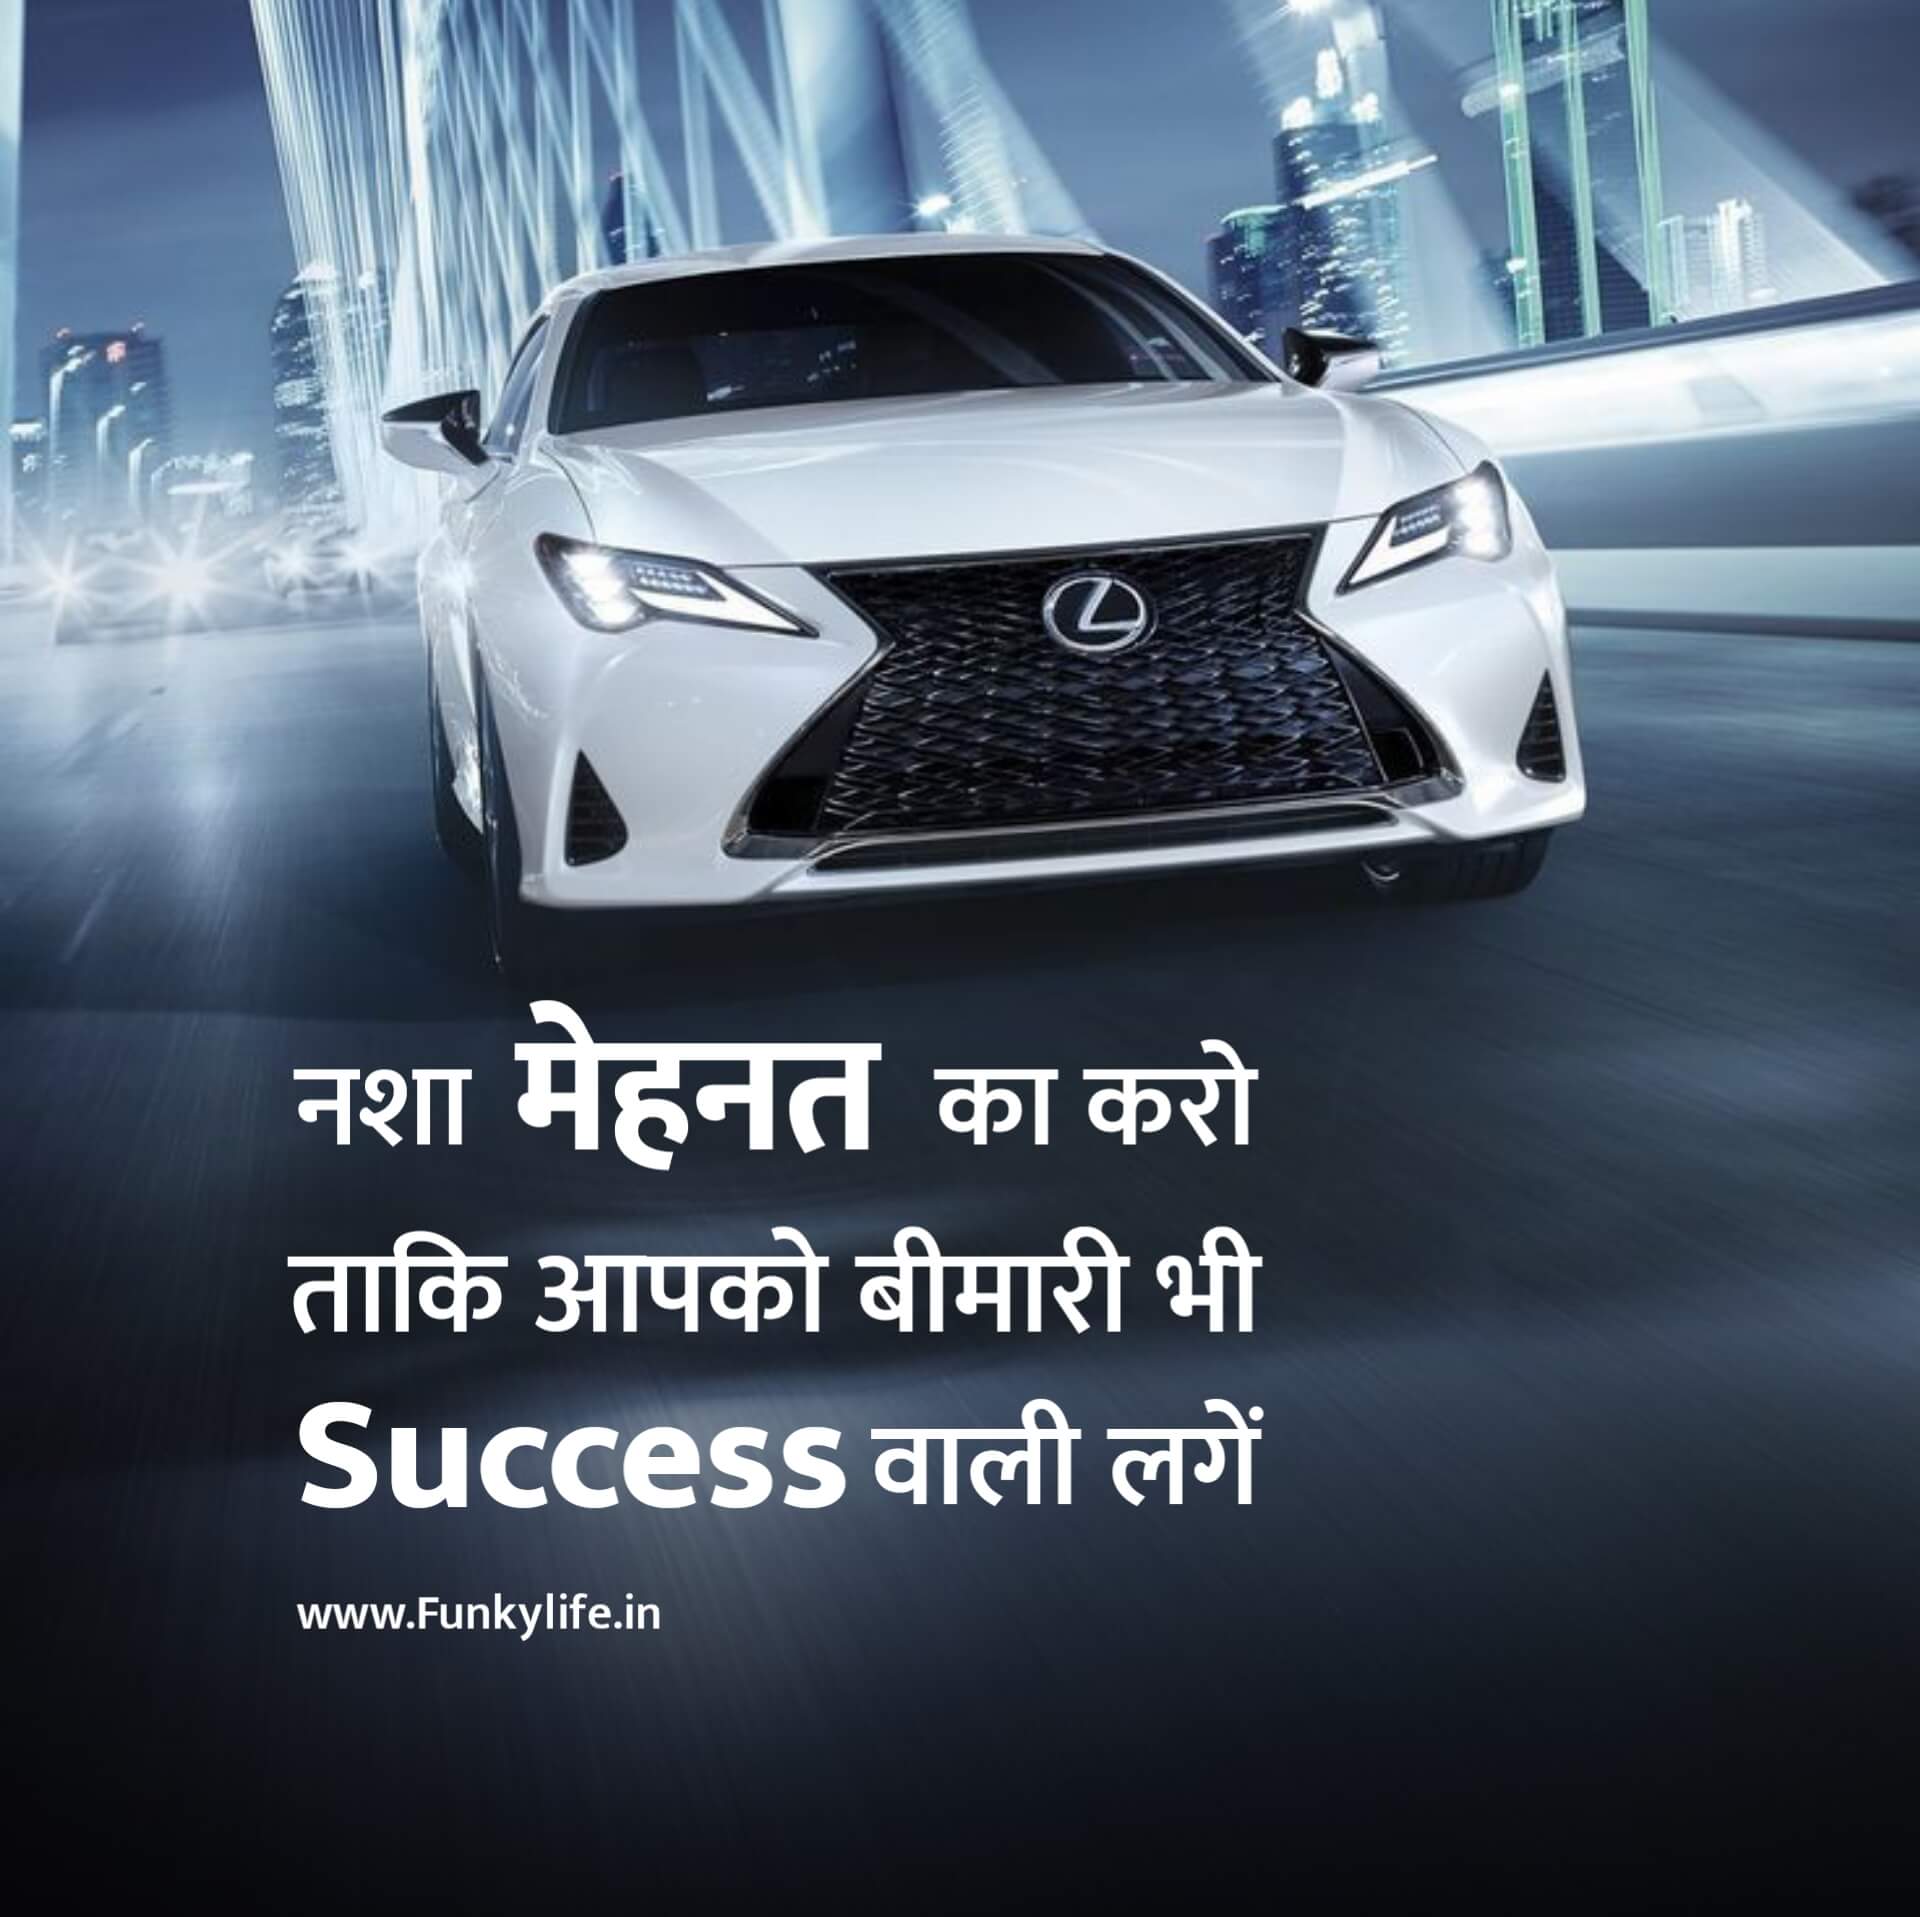 Success Quotes in Hindi